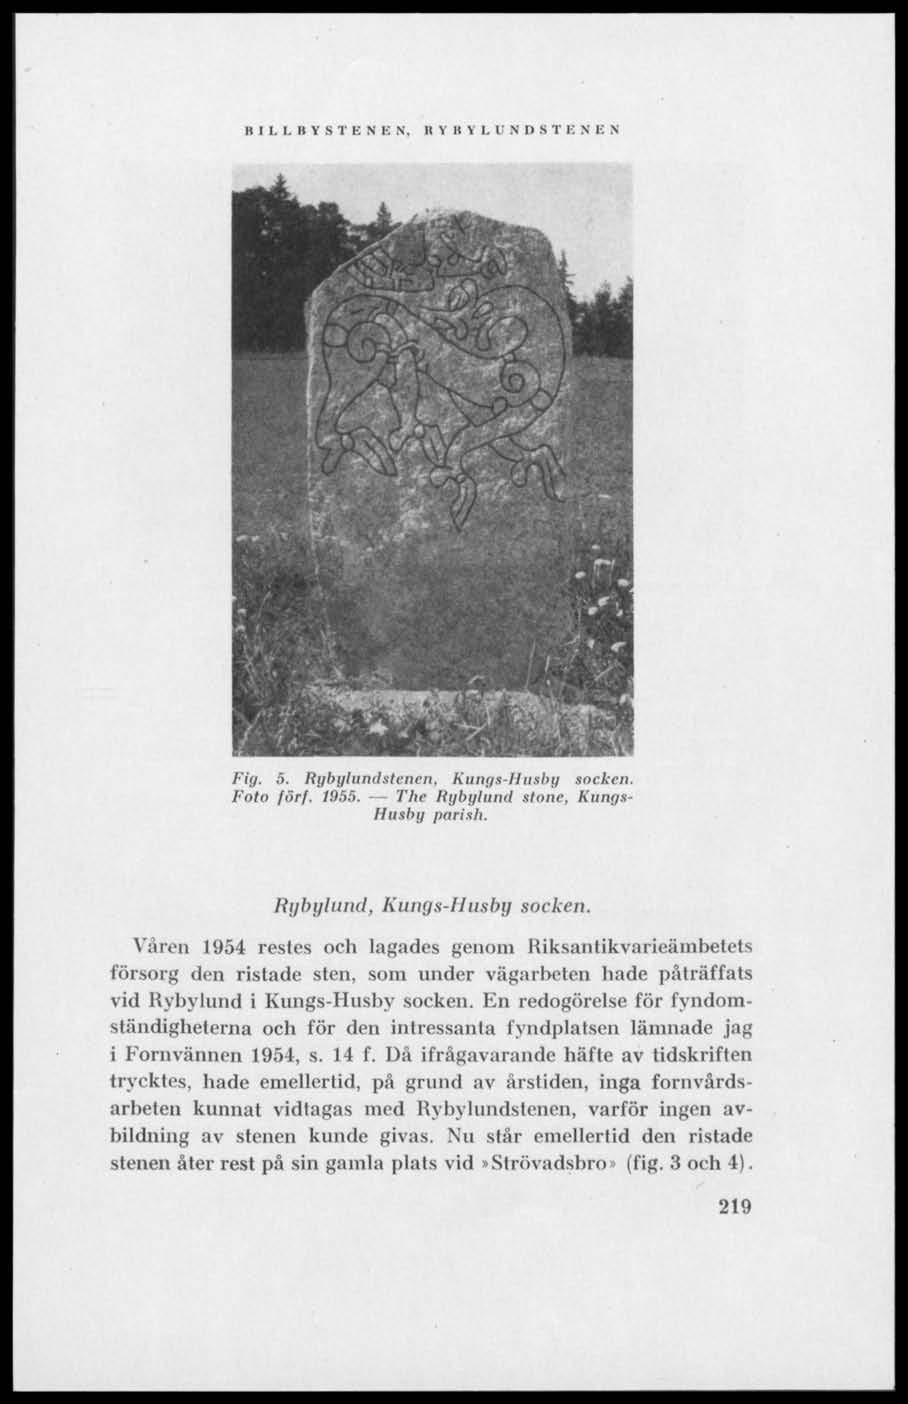 I, B Y S T E N E N, R V B Y I. I N I) S T E N E N Fig. 5. Rgbglundslencn, Kungs-Husby socken. Foto förf. 1955. The Rybylund stone, Kungs- Husby parish. Rybylund, Kungs-IIusbg socken.